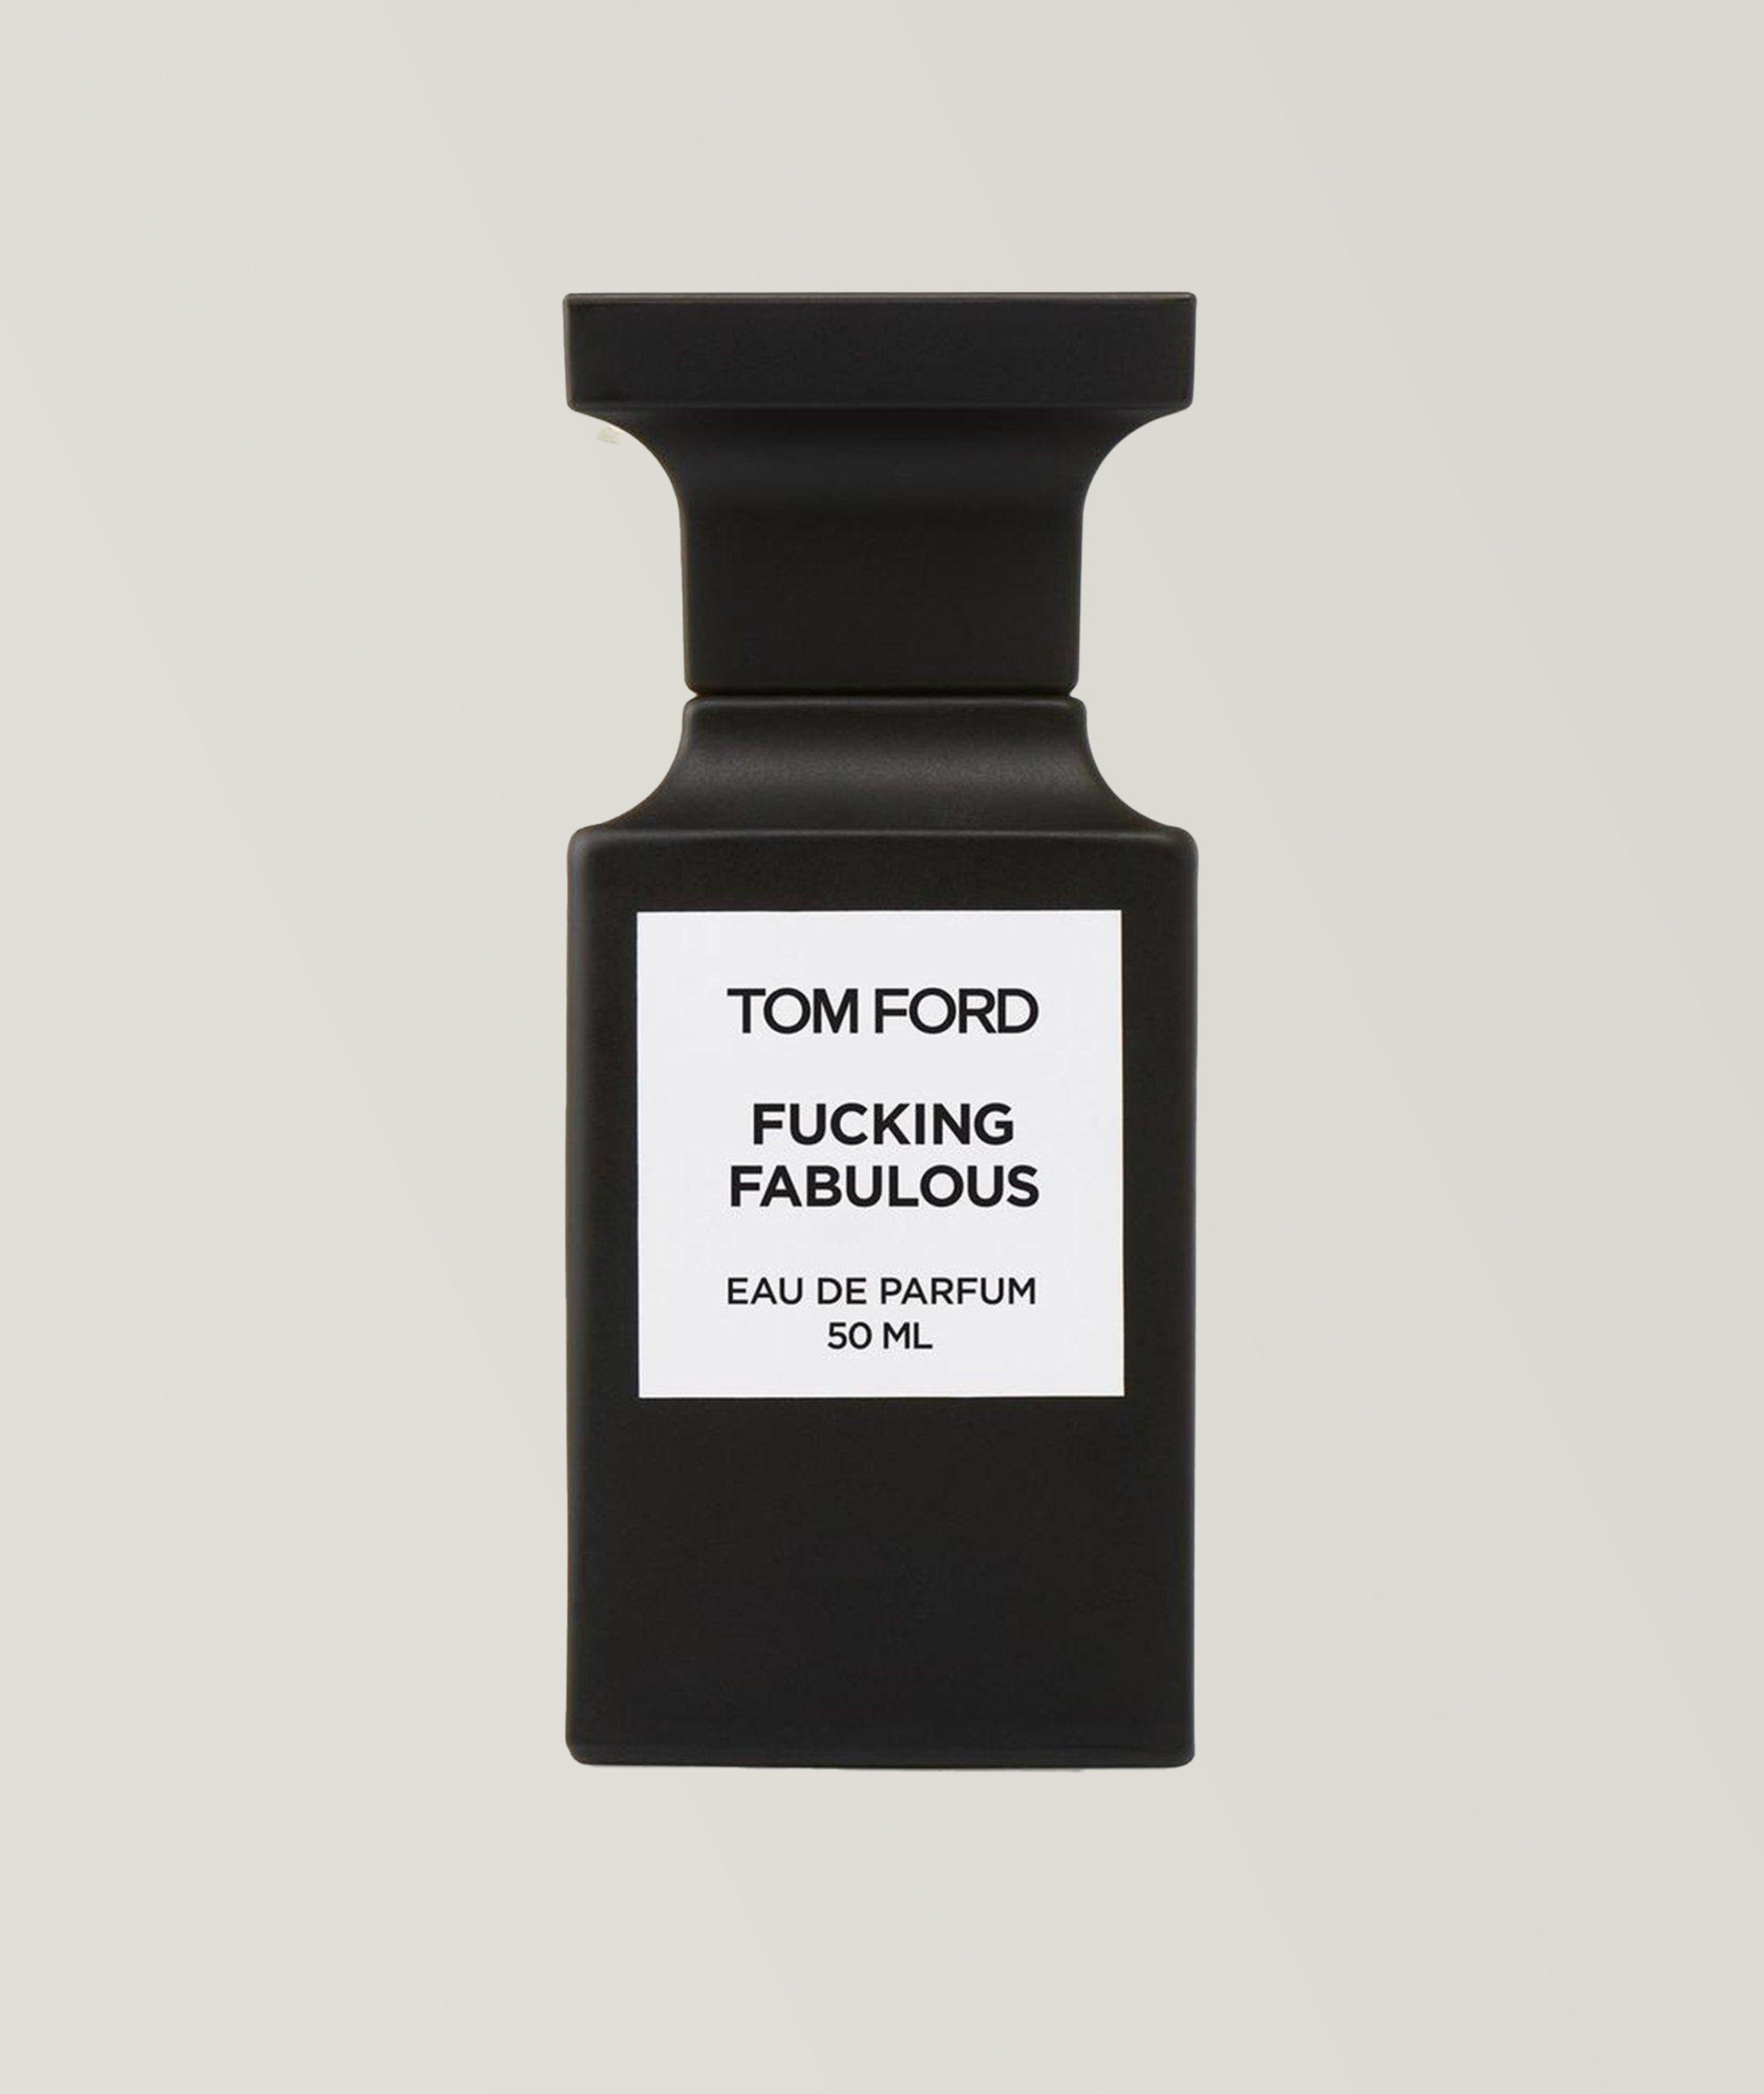 TOM FORD Eau de parfum F*cking Fabulous 50ml